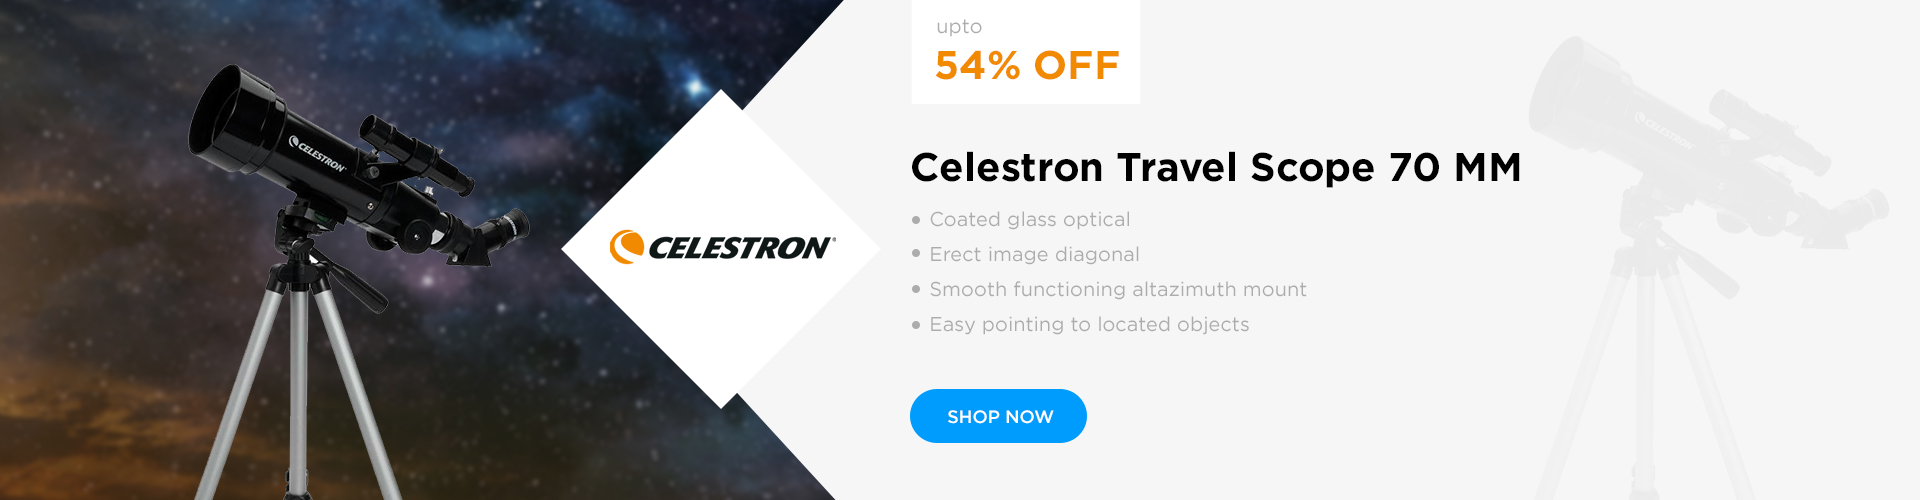 Celestron TravelScope 70mm Telescope